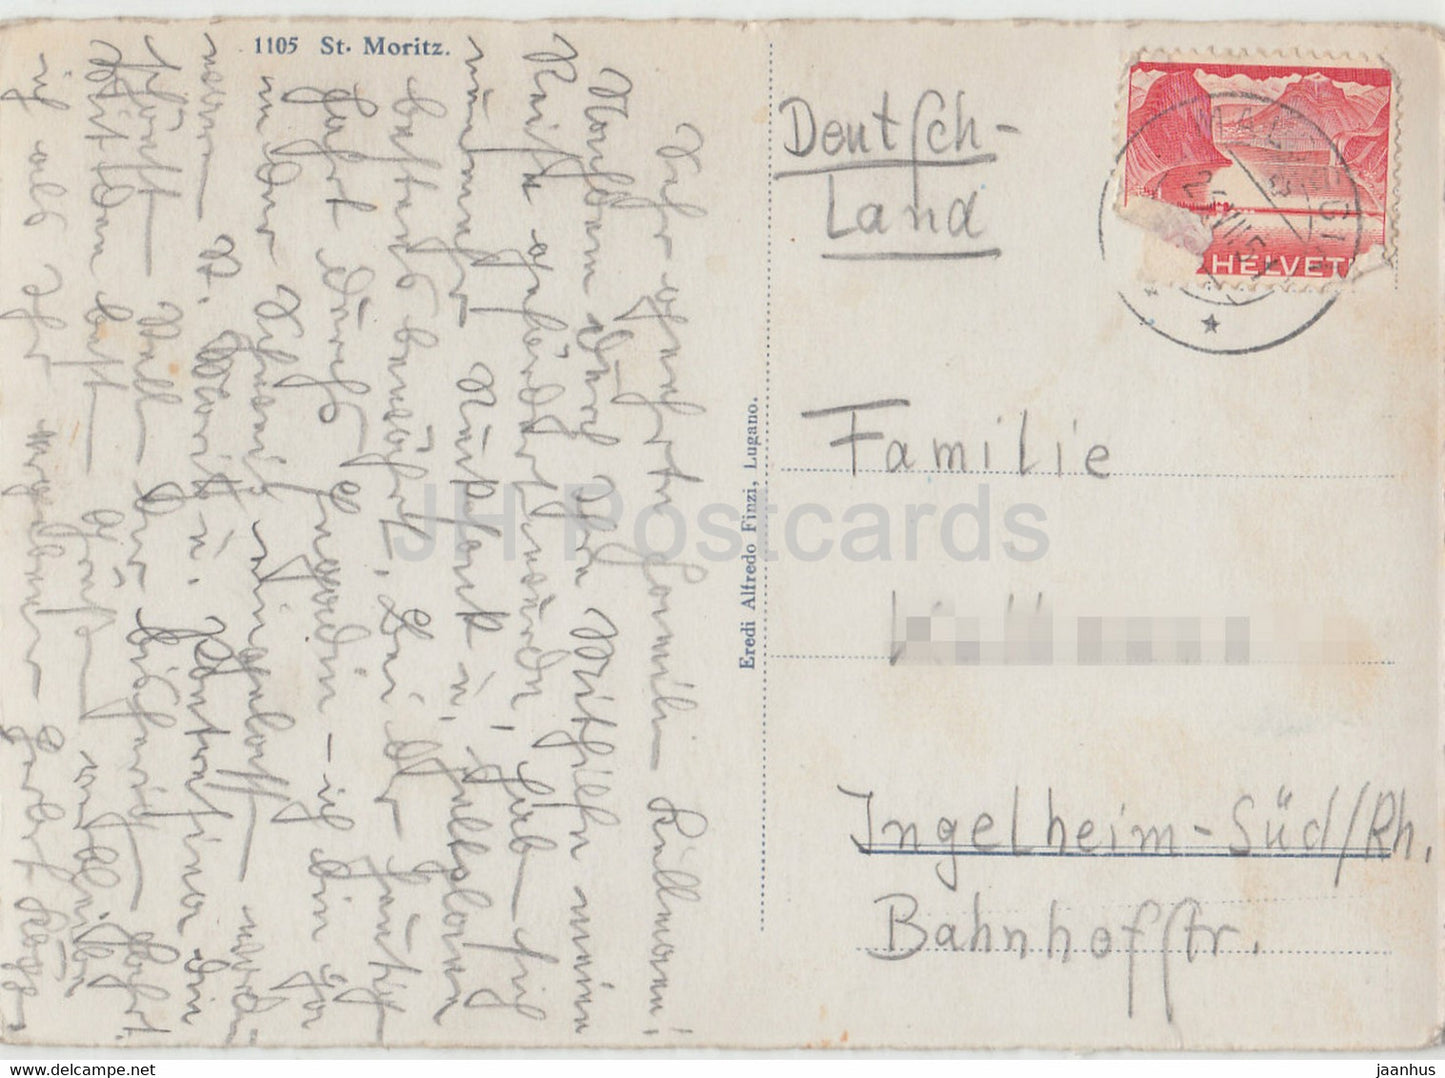 St Moritz - 1105 - old postcard - 1951 - Switzerland - used